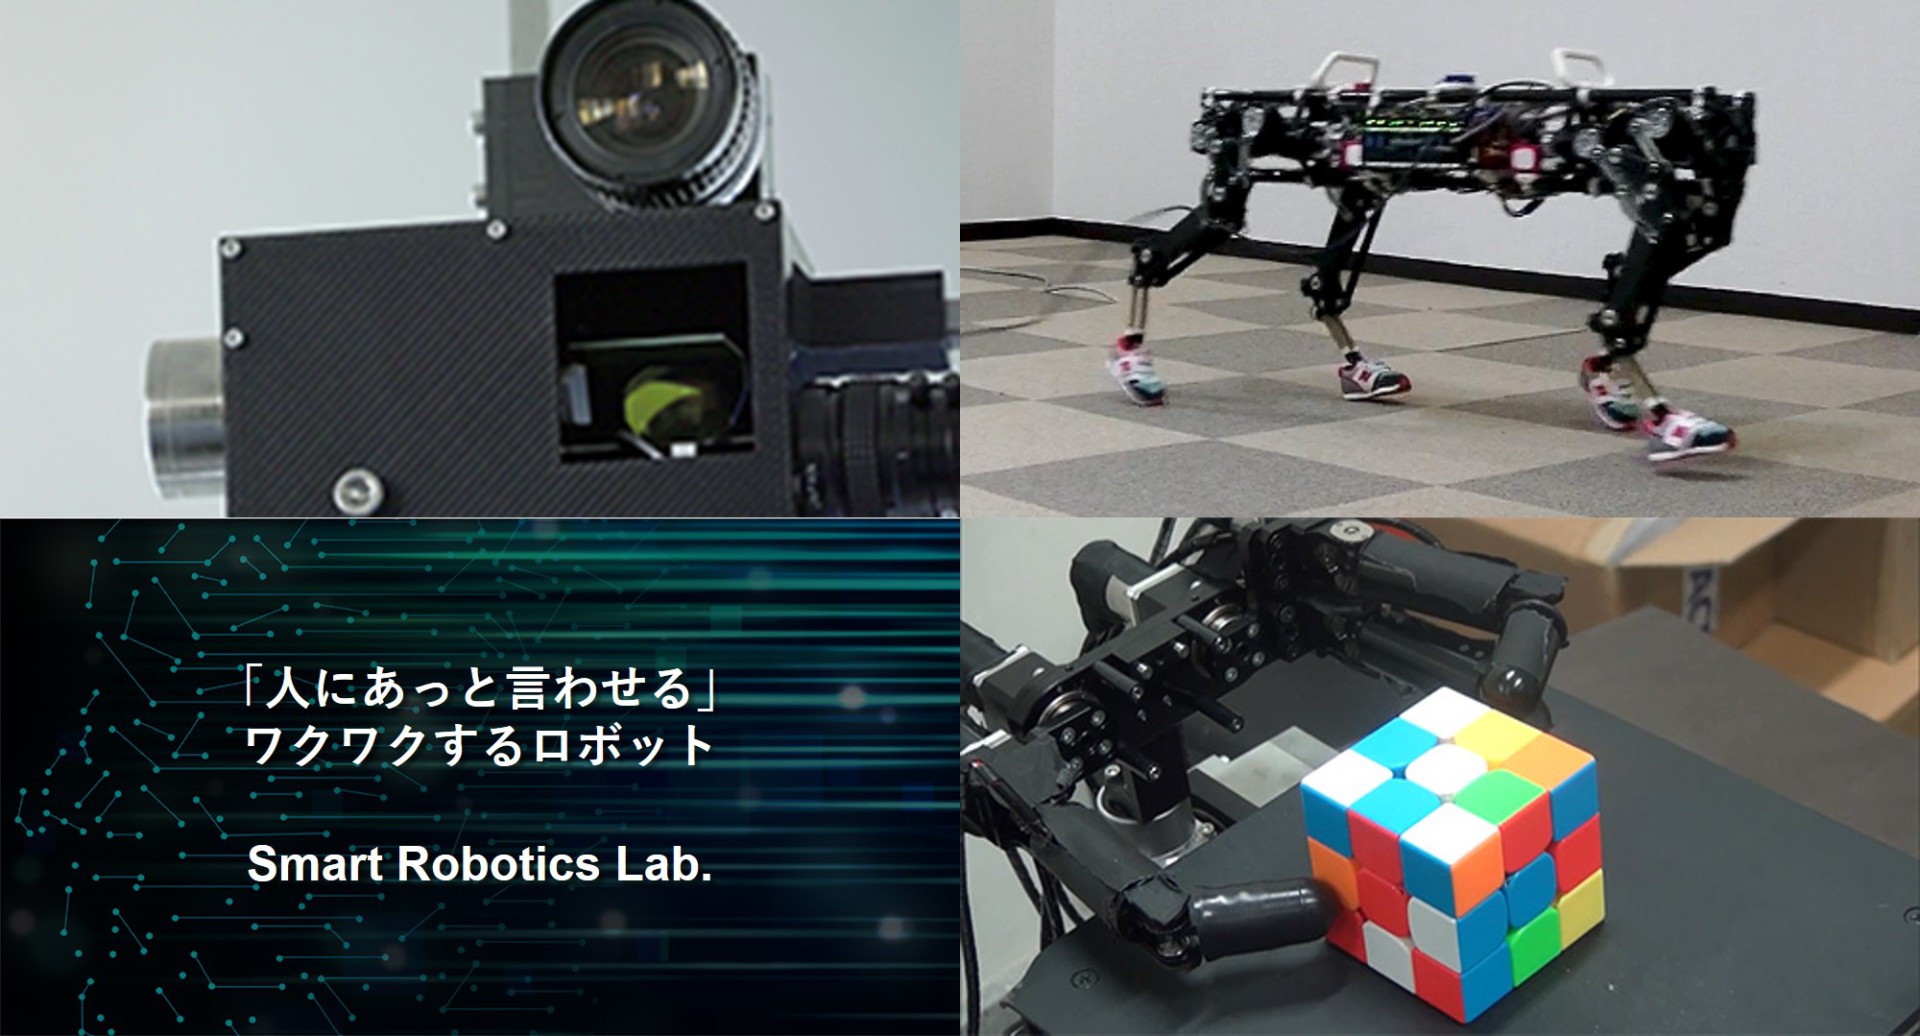 Smart Robotics Laboratory